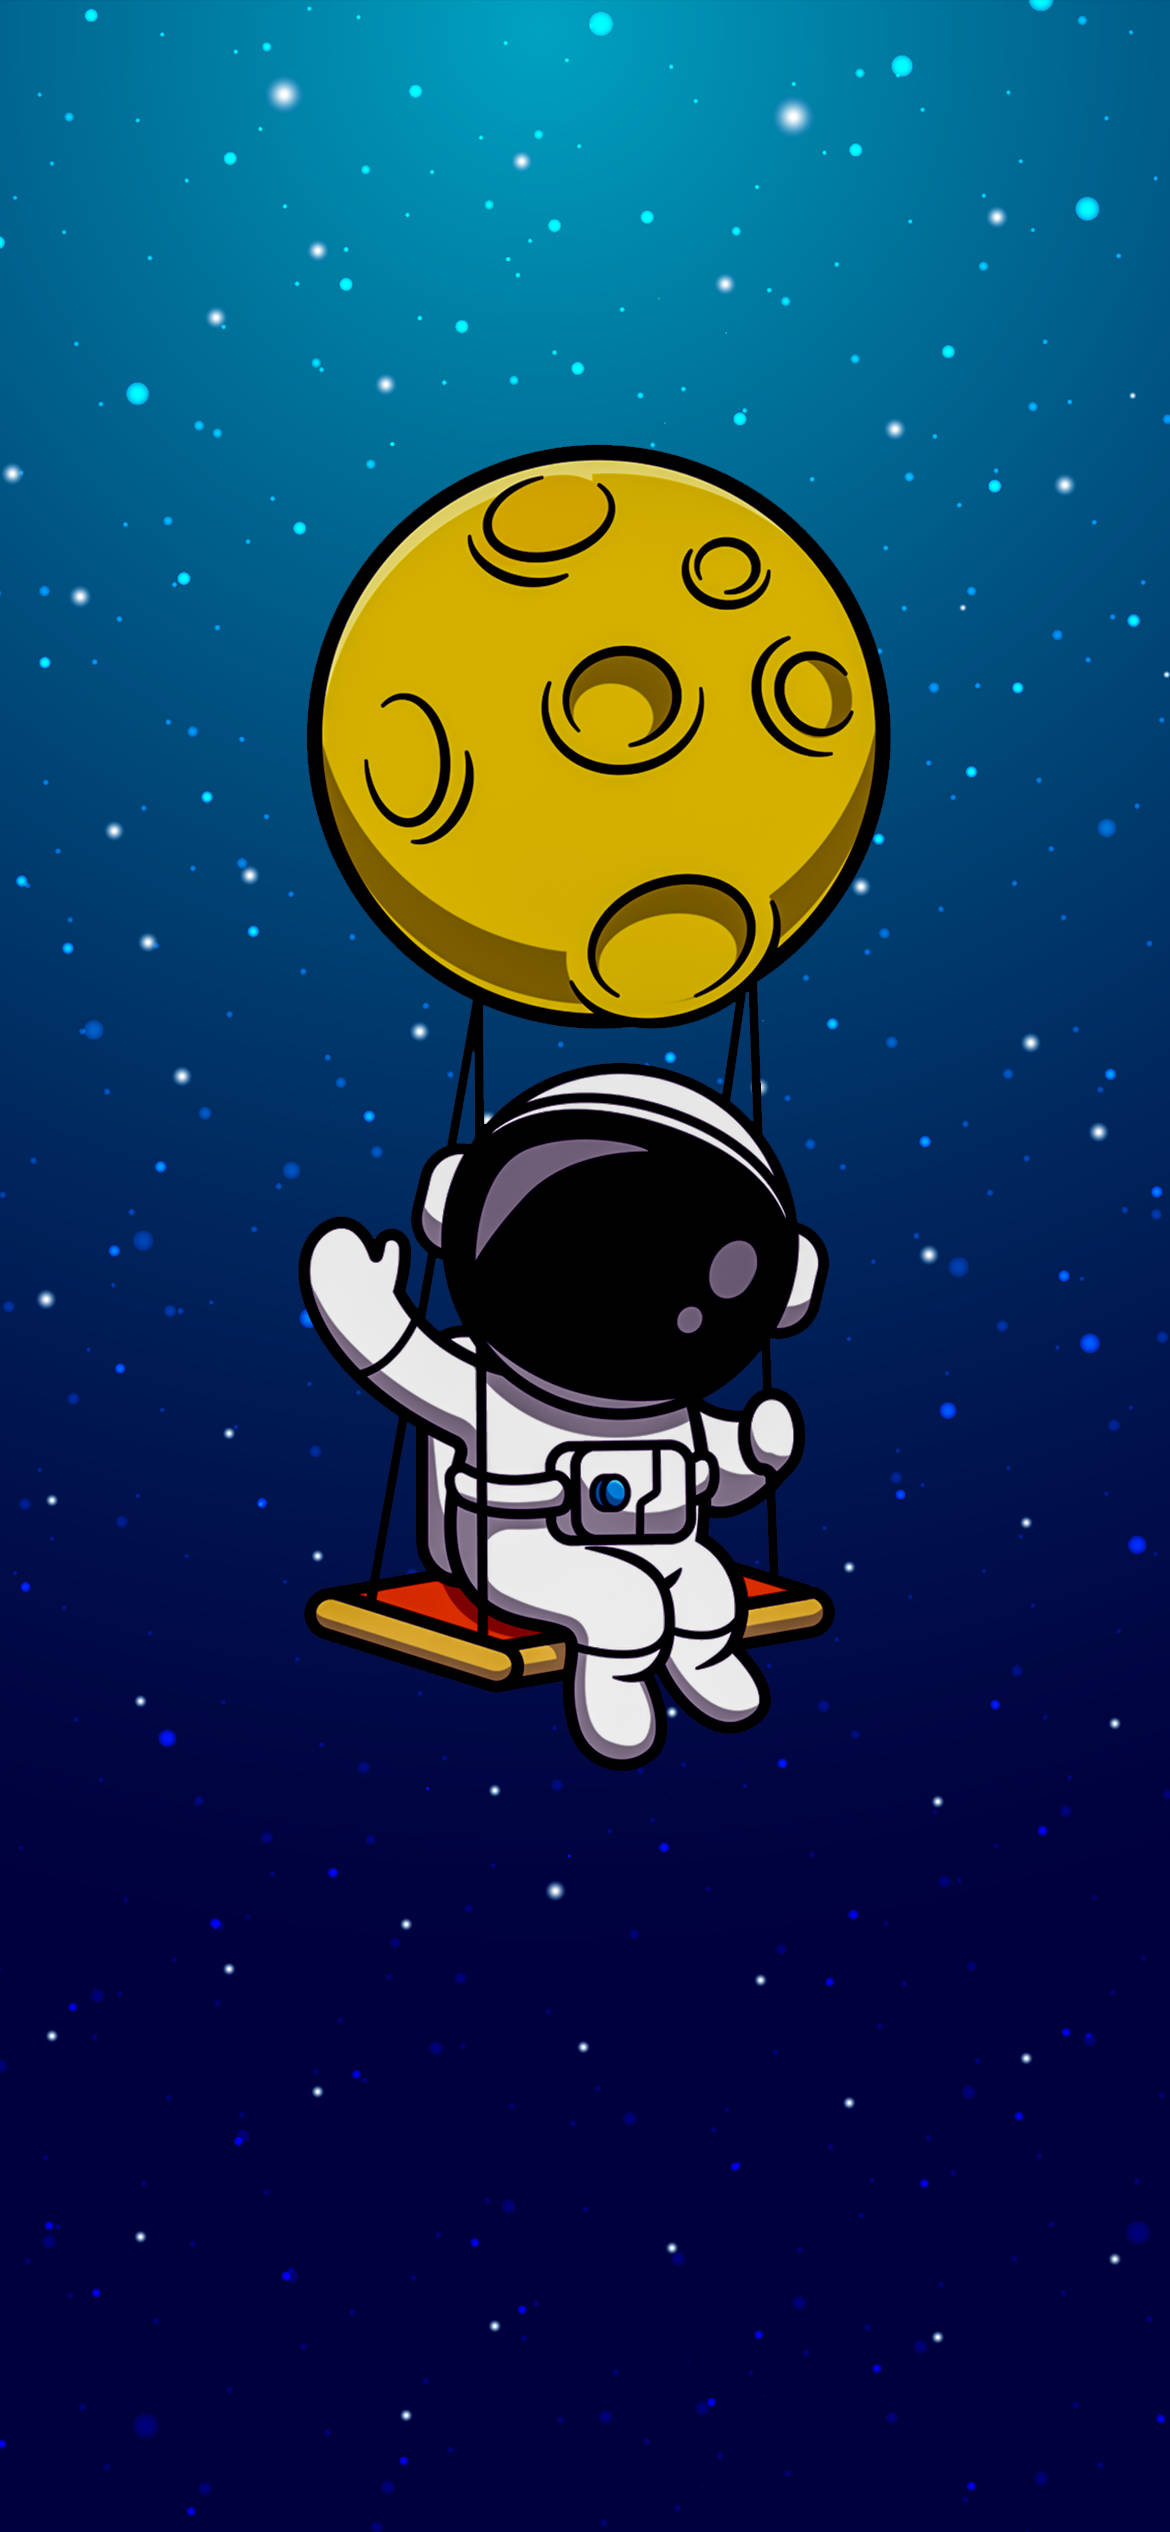 Download Cartoon Astronaut On A Swing Wallpaper 